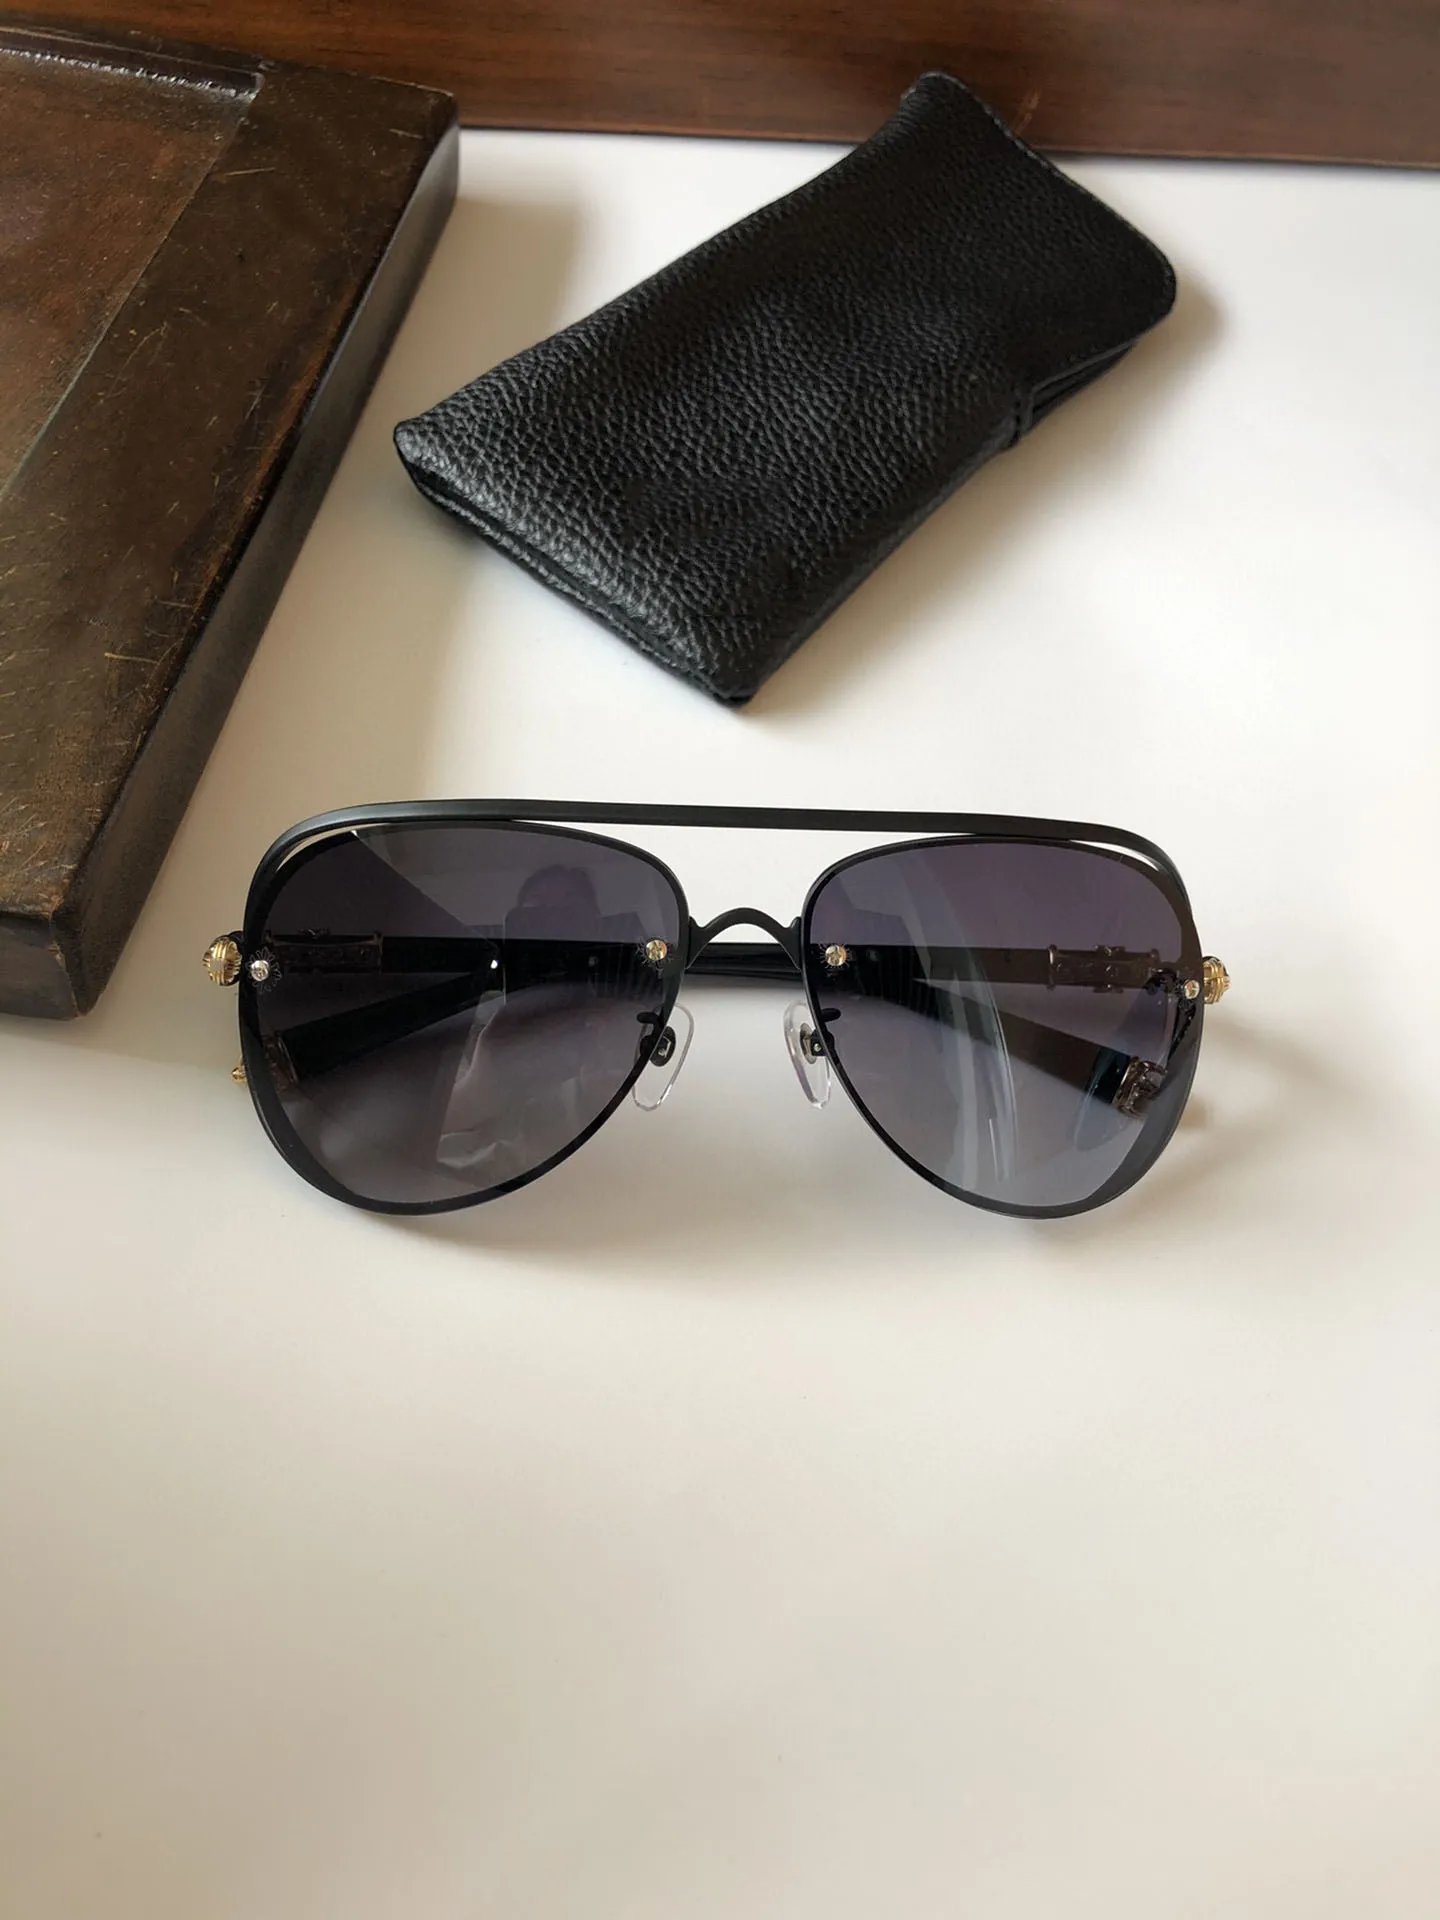 Hearts Ms Teraker Top Original High Quality Designer Solglasögon för män Womens New Selling World Famous Classic Retro Super Luxur291y